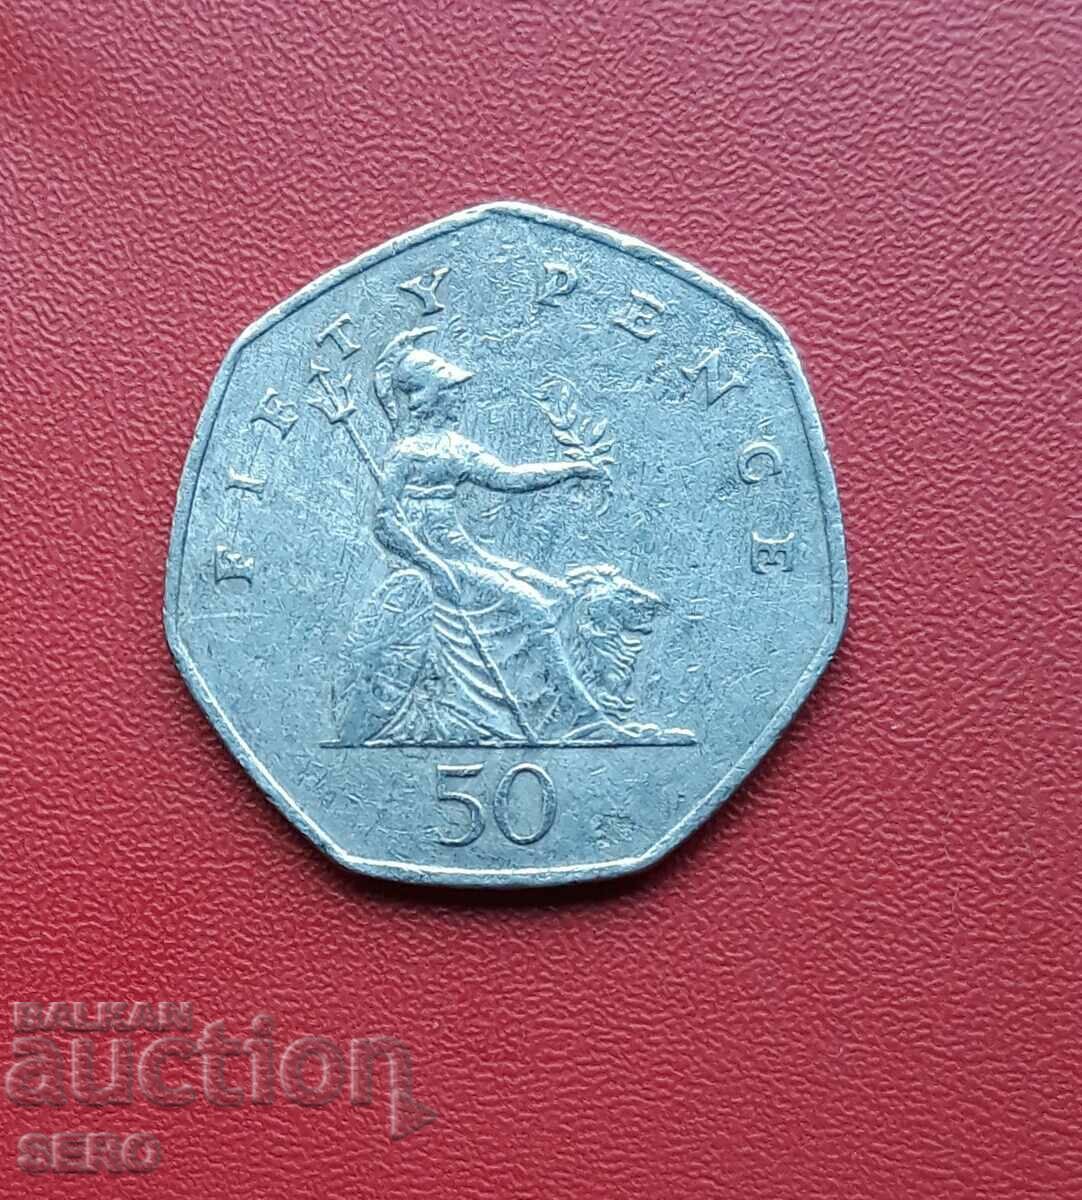 Great Britain - 50 pence 2001